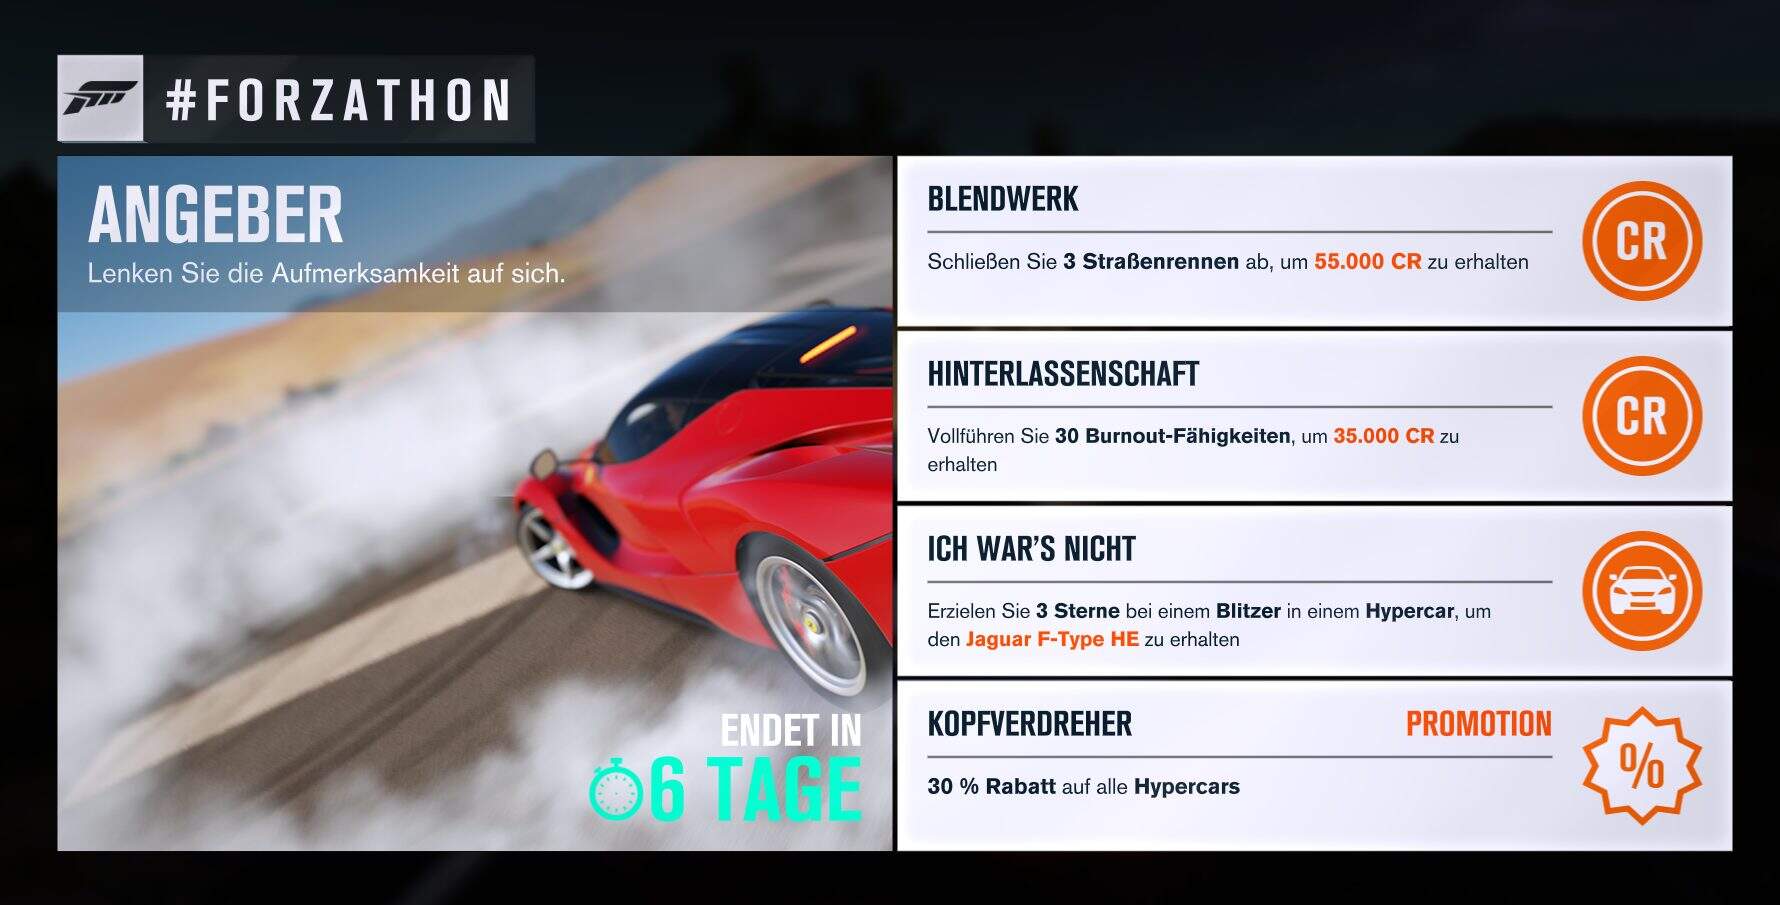 Forza Horizon 3 #Forzathon Guide KW 15 – Angeber